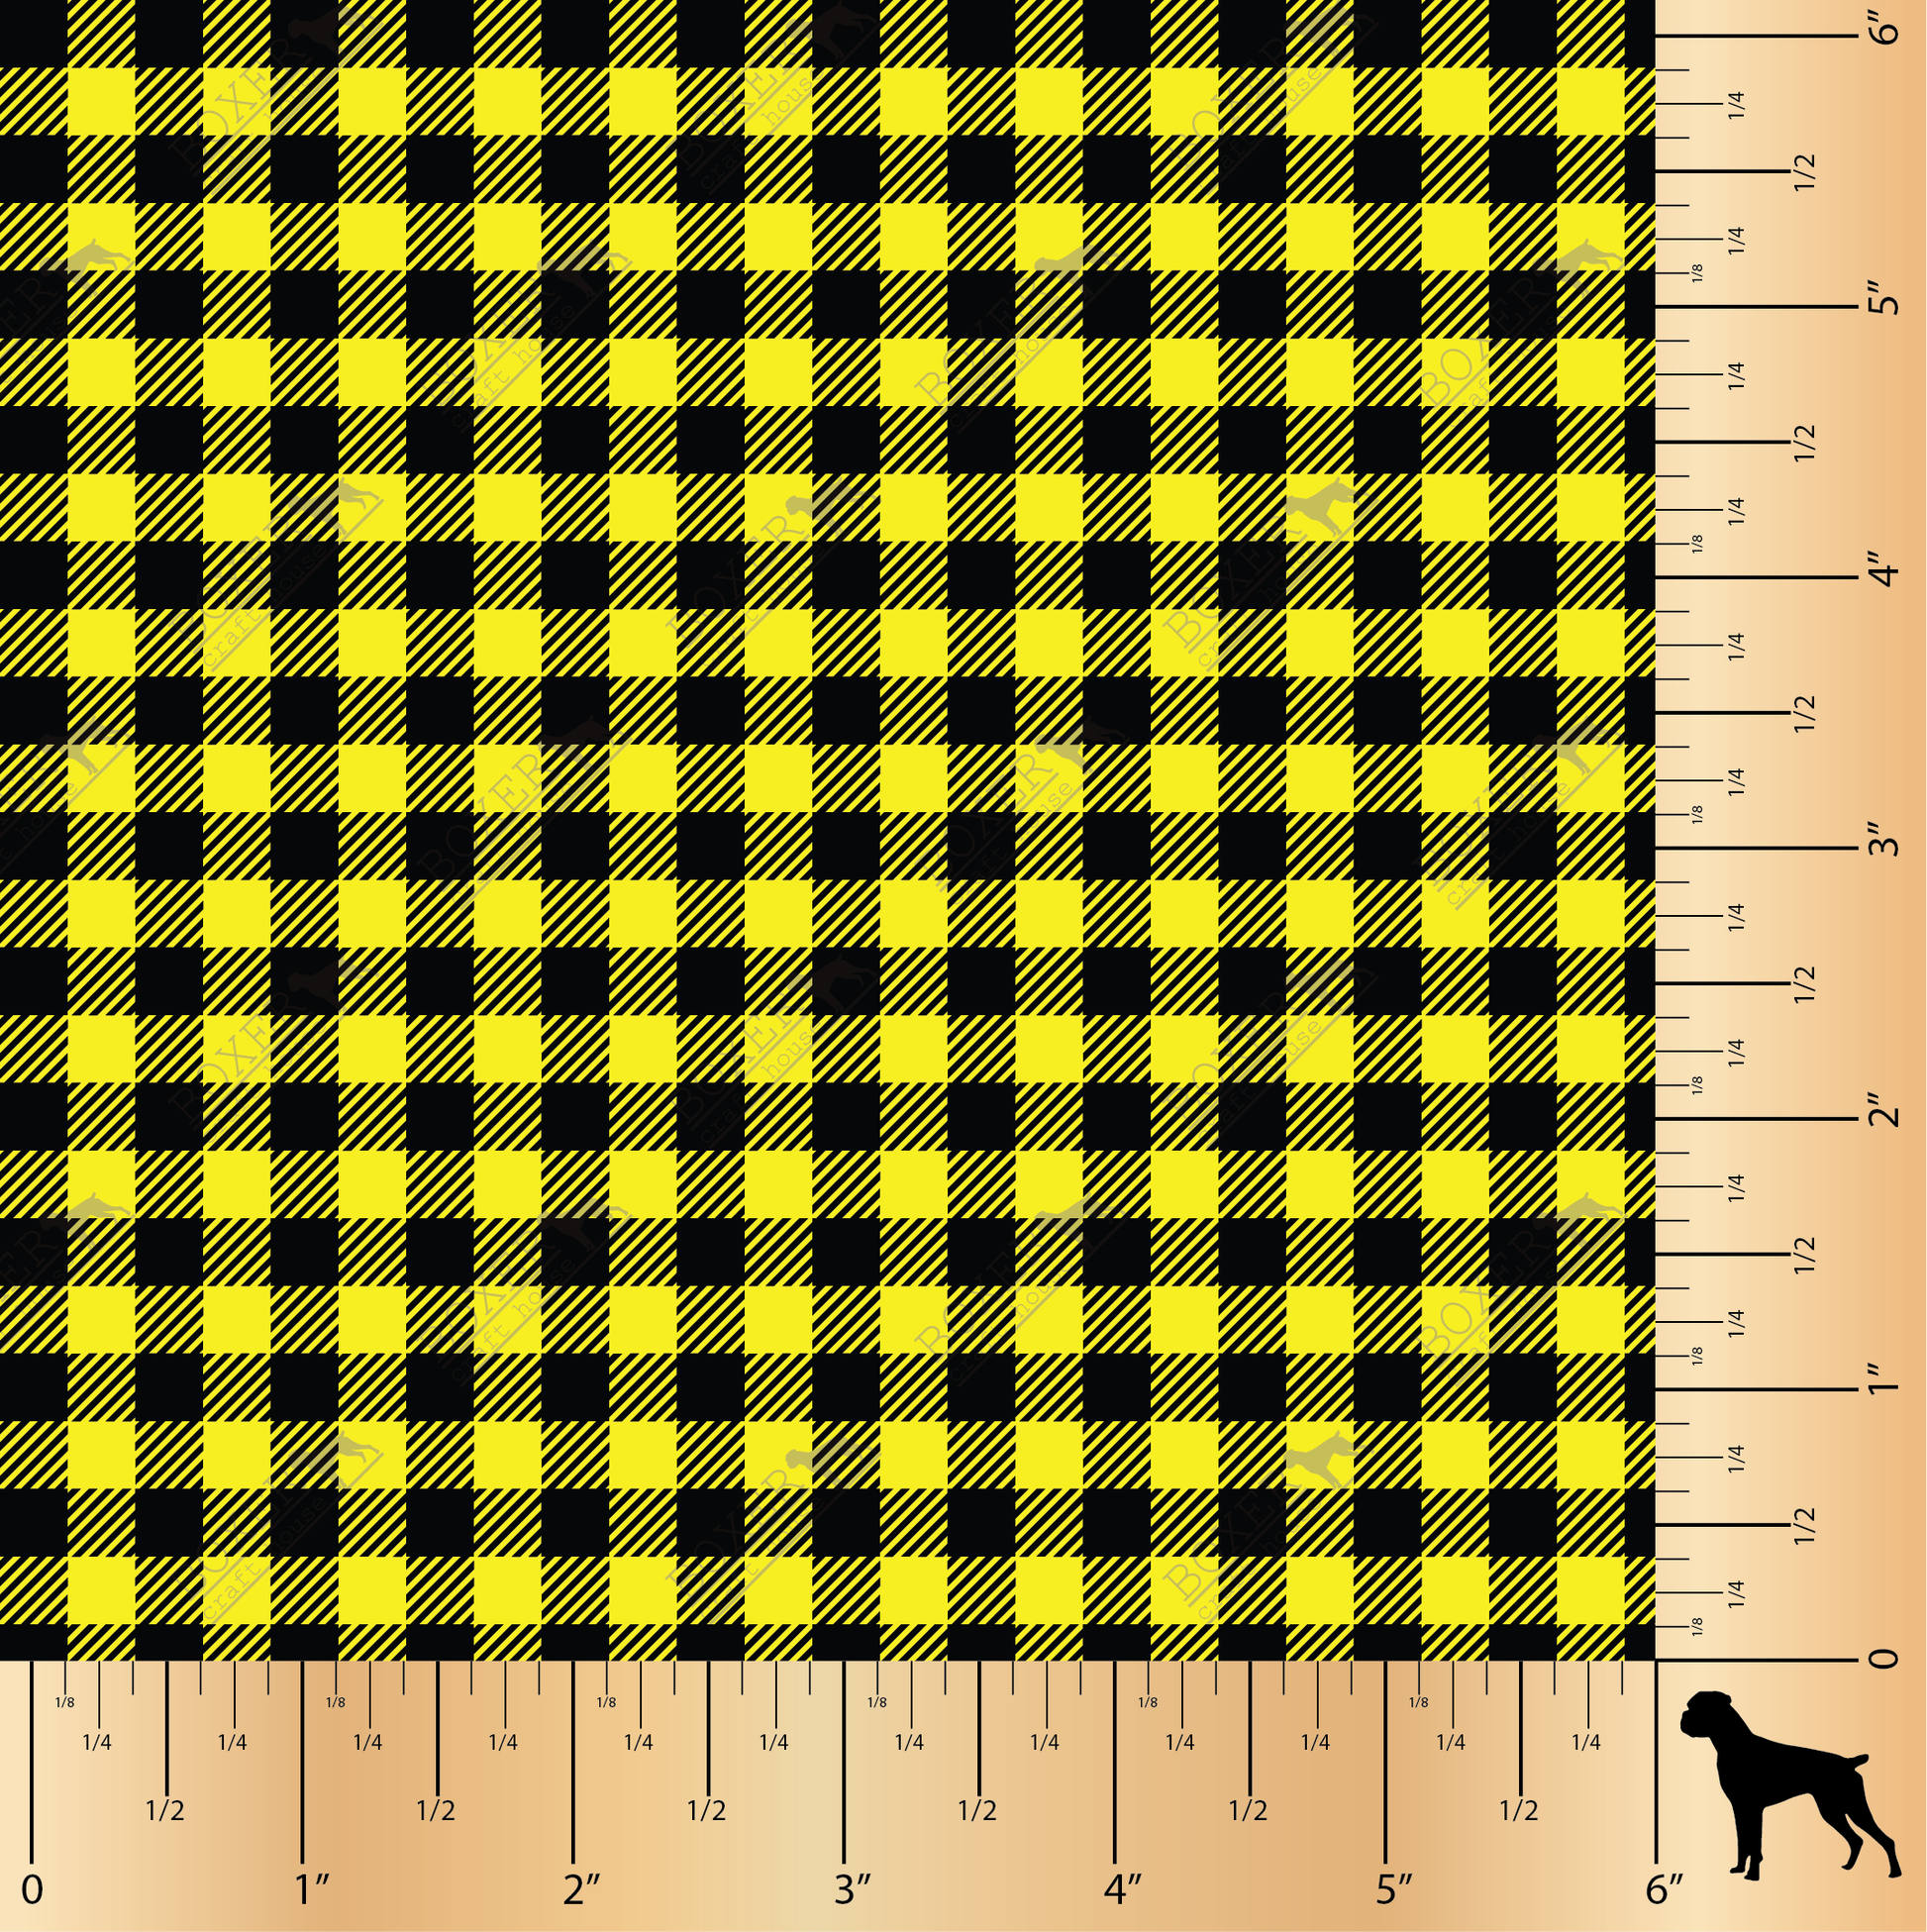 Checks,tartan,plaid,diagonal,yellow - free image from